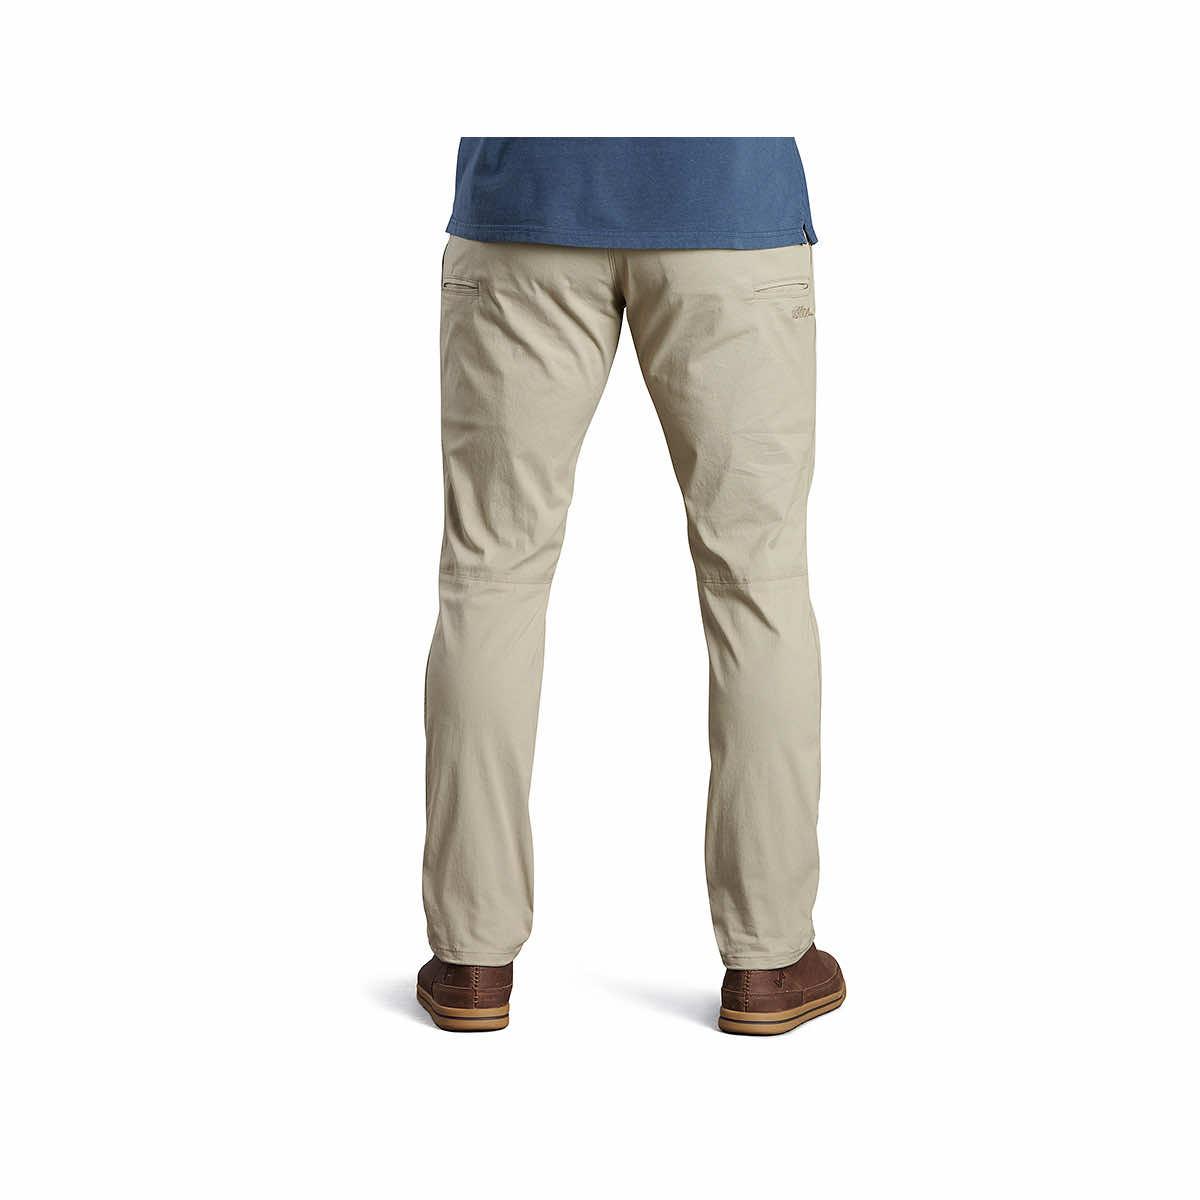 KETL Mtn. Tomfoolery Stretchy & Lightweight Travel Pants